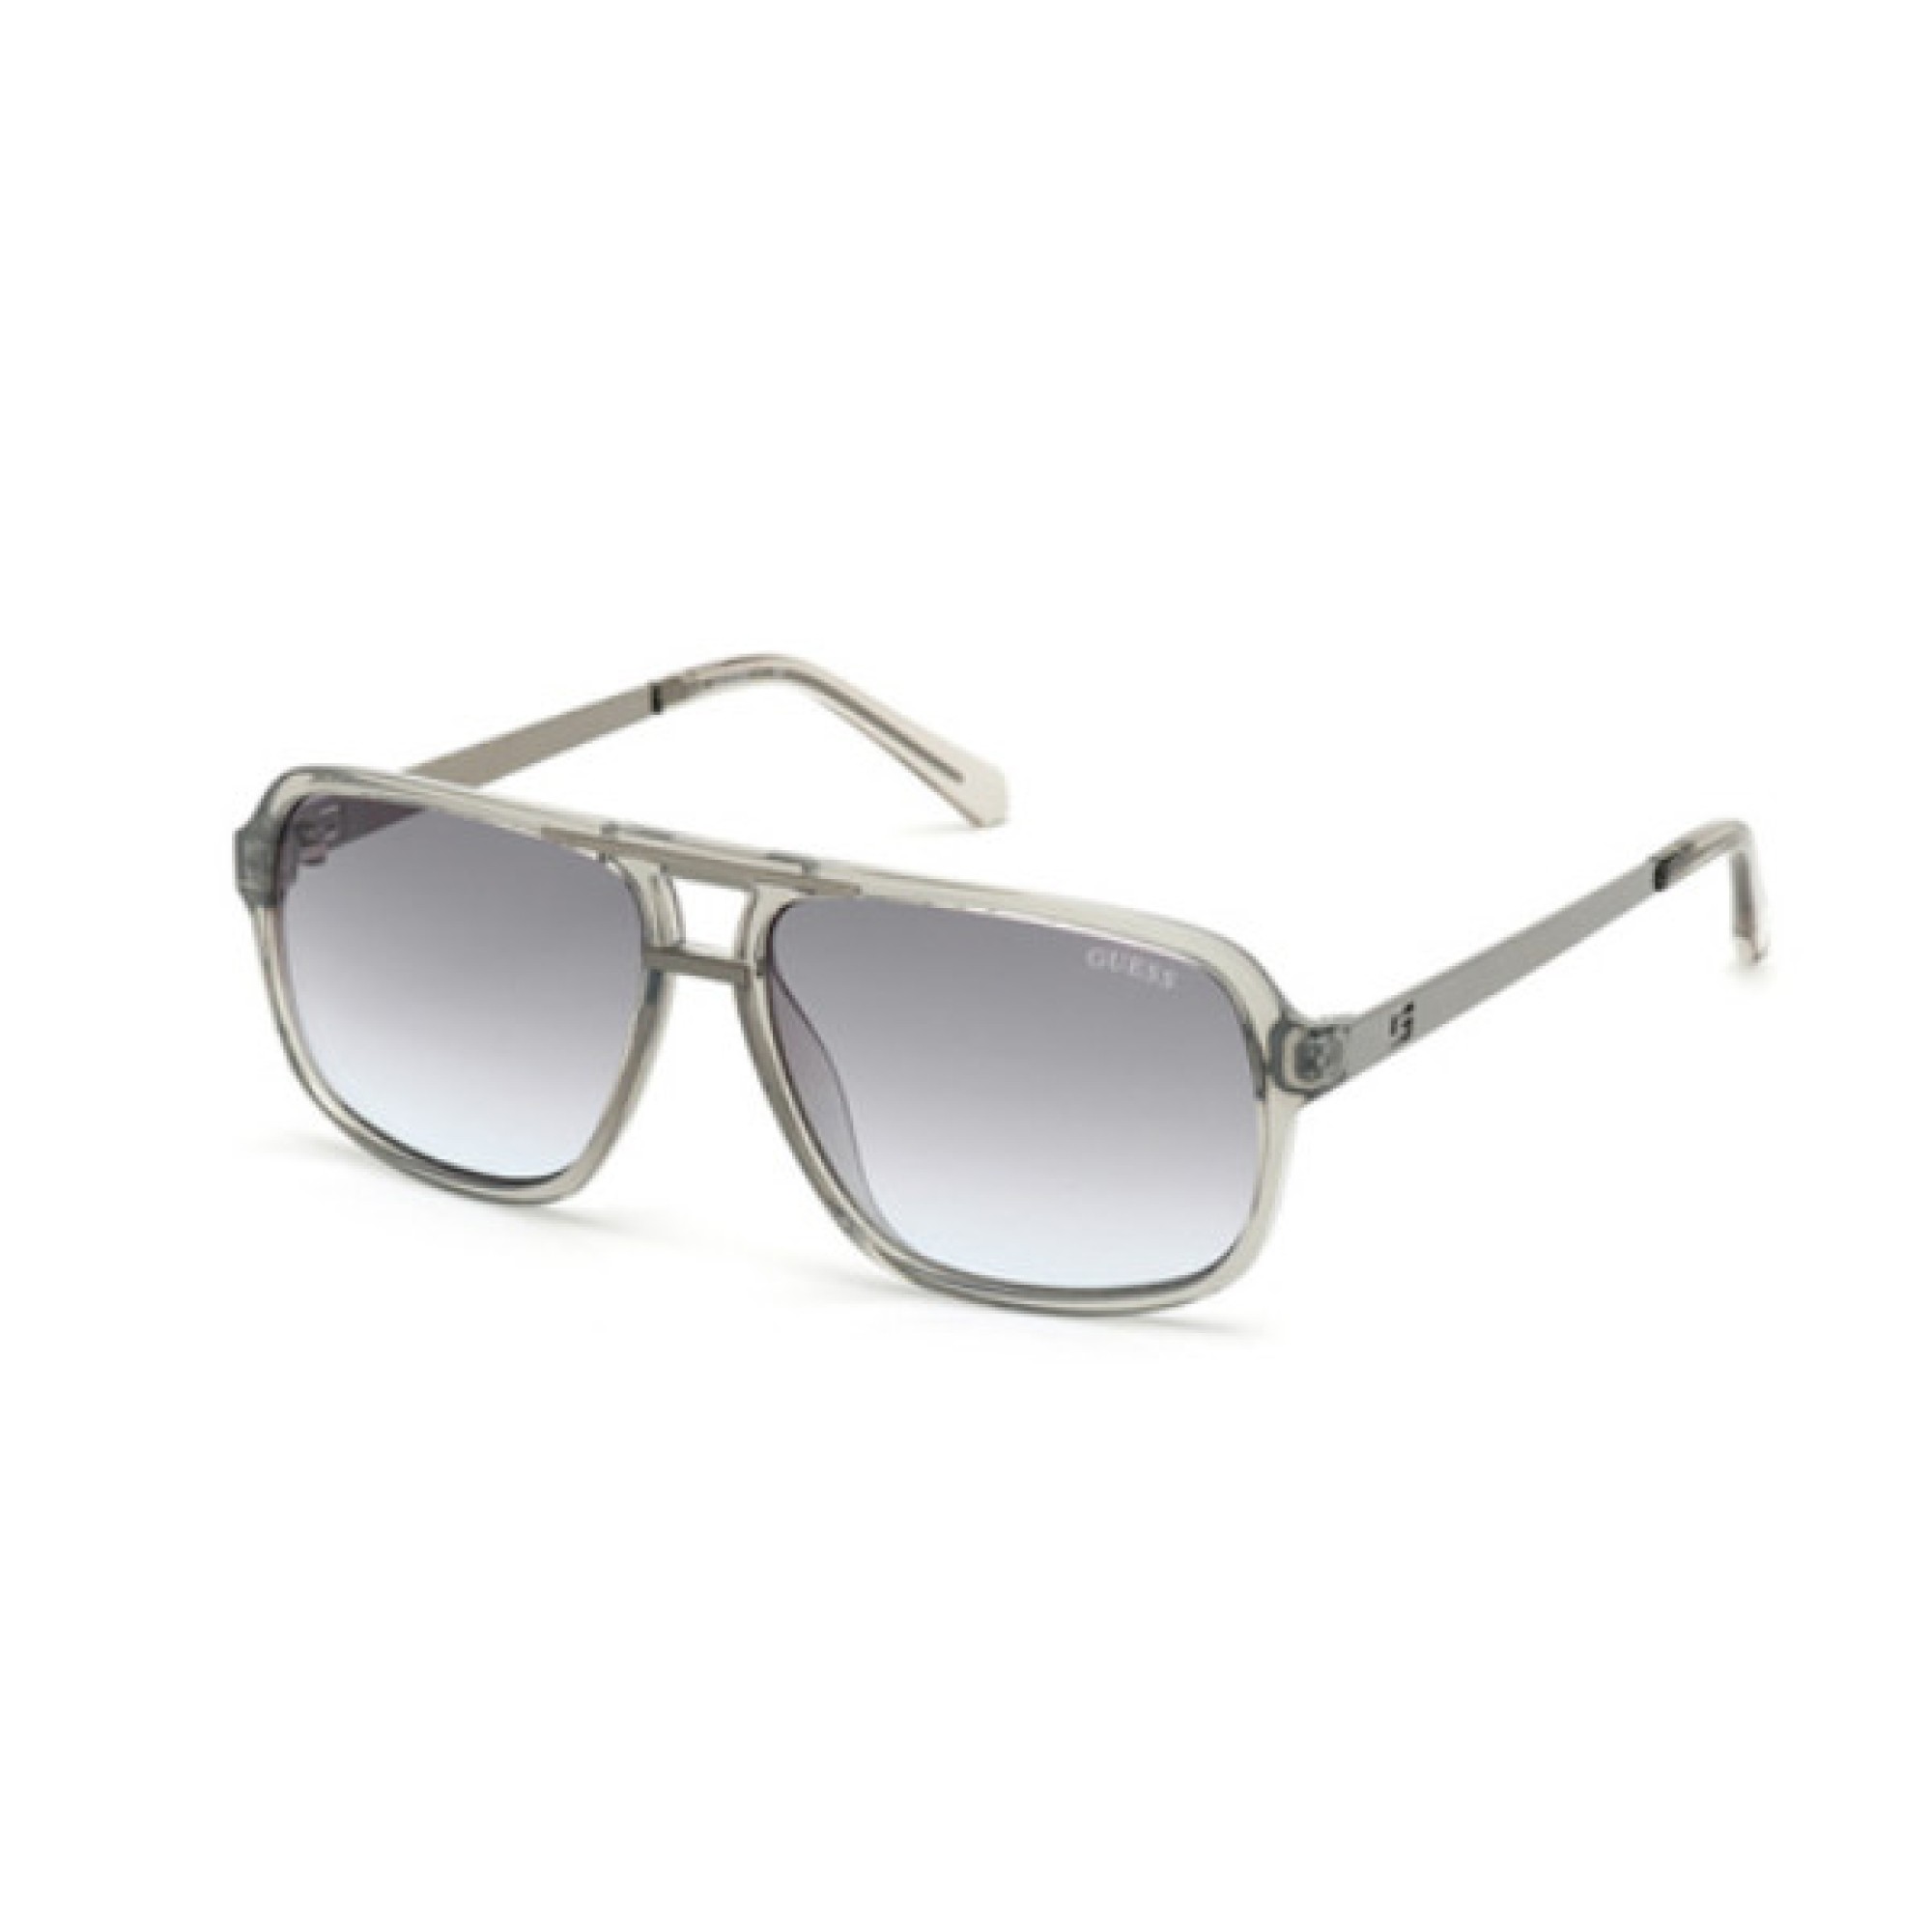 Guess GU 6955 - 20W Grey | Sunglasses Man